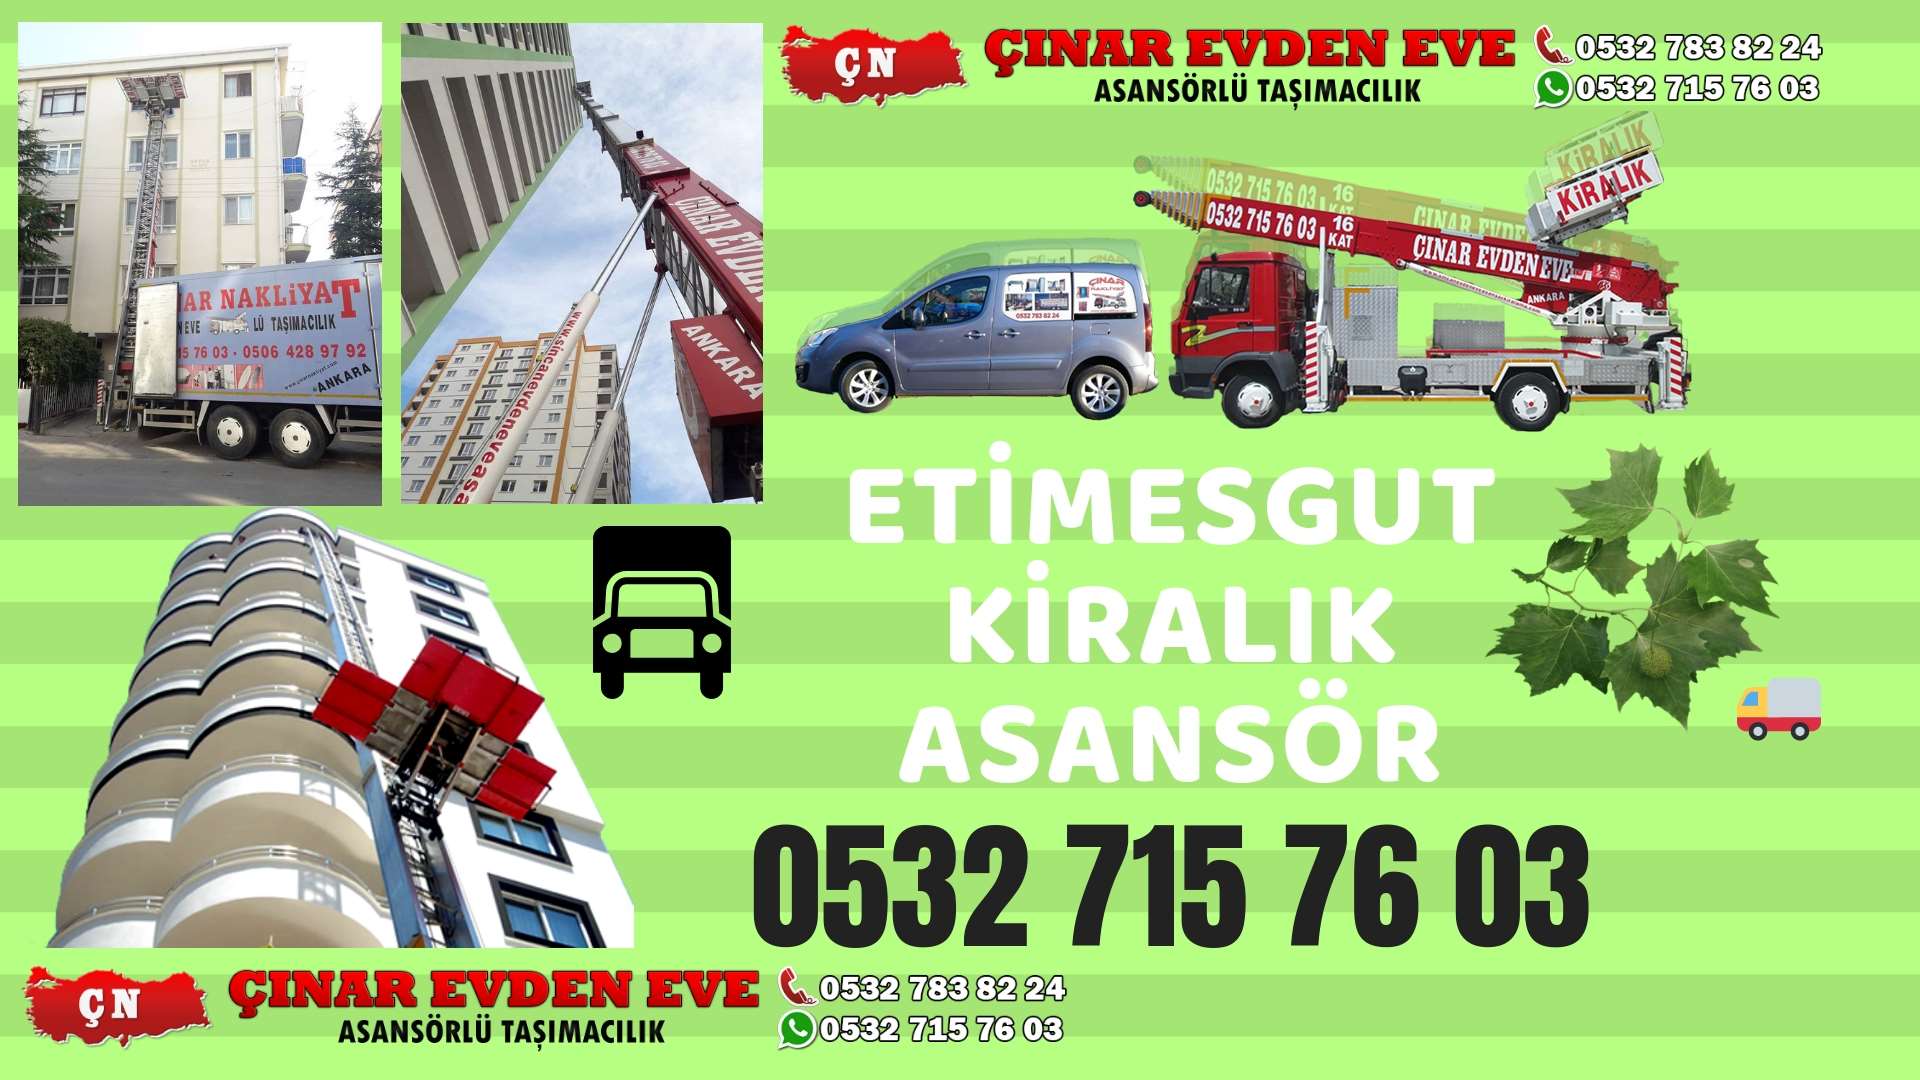 Ankara Ayaş Ev taşıma asansörü kiralama ankara 0532 715 76 03